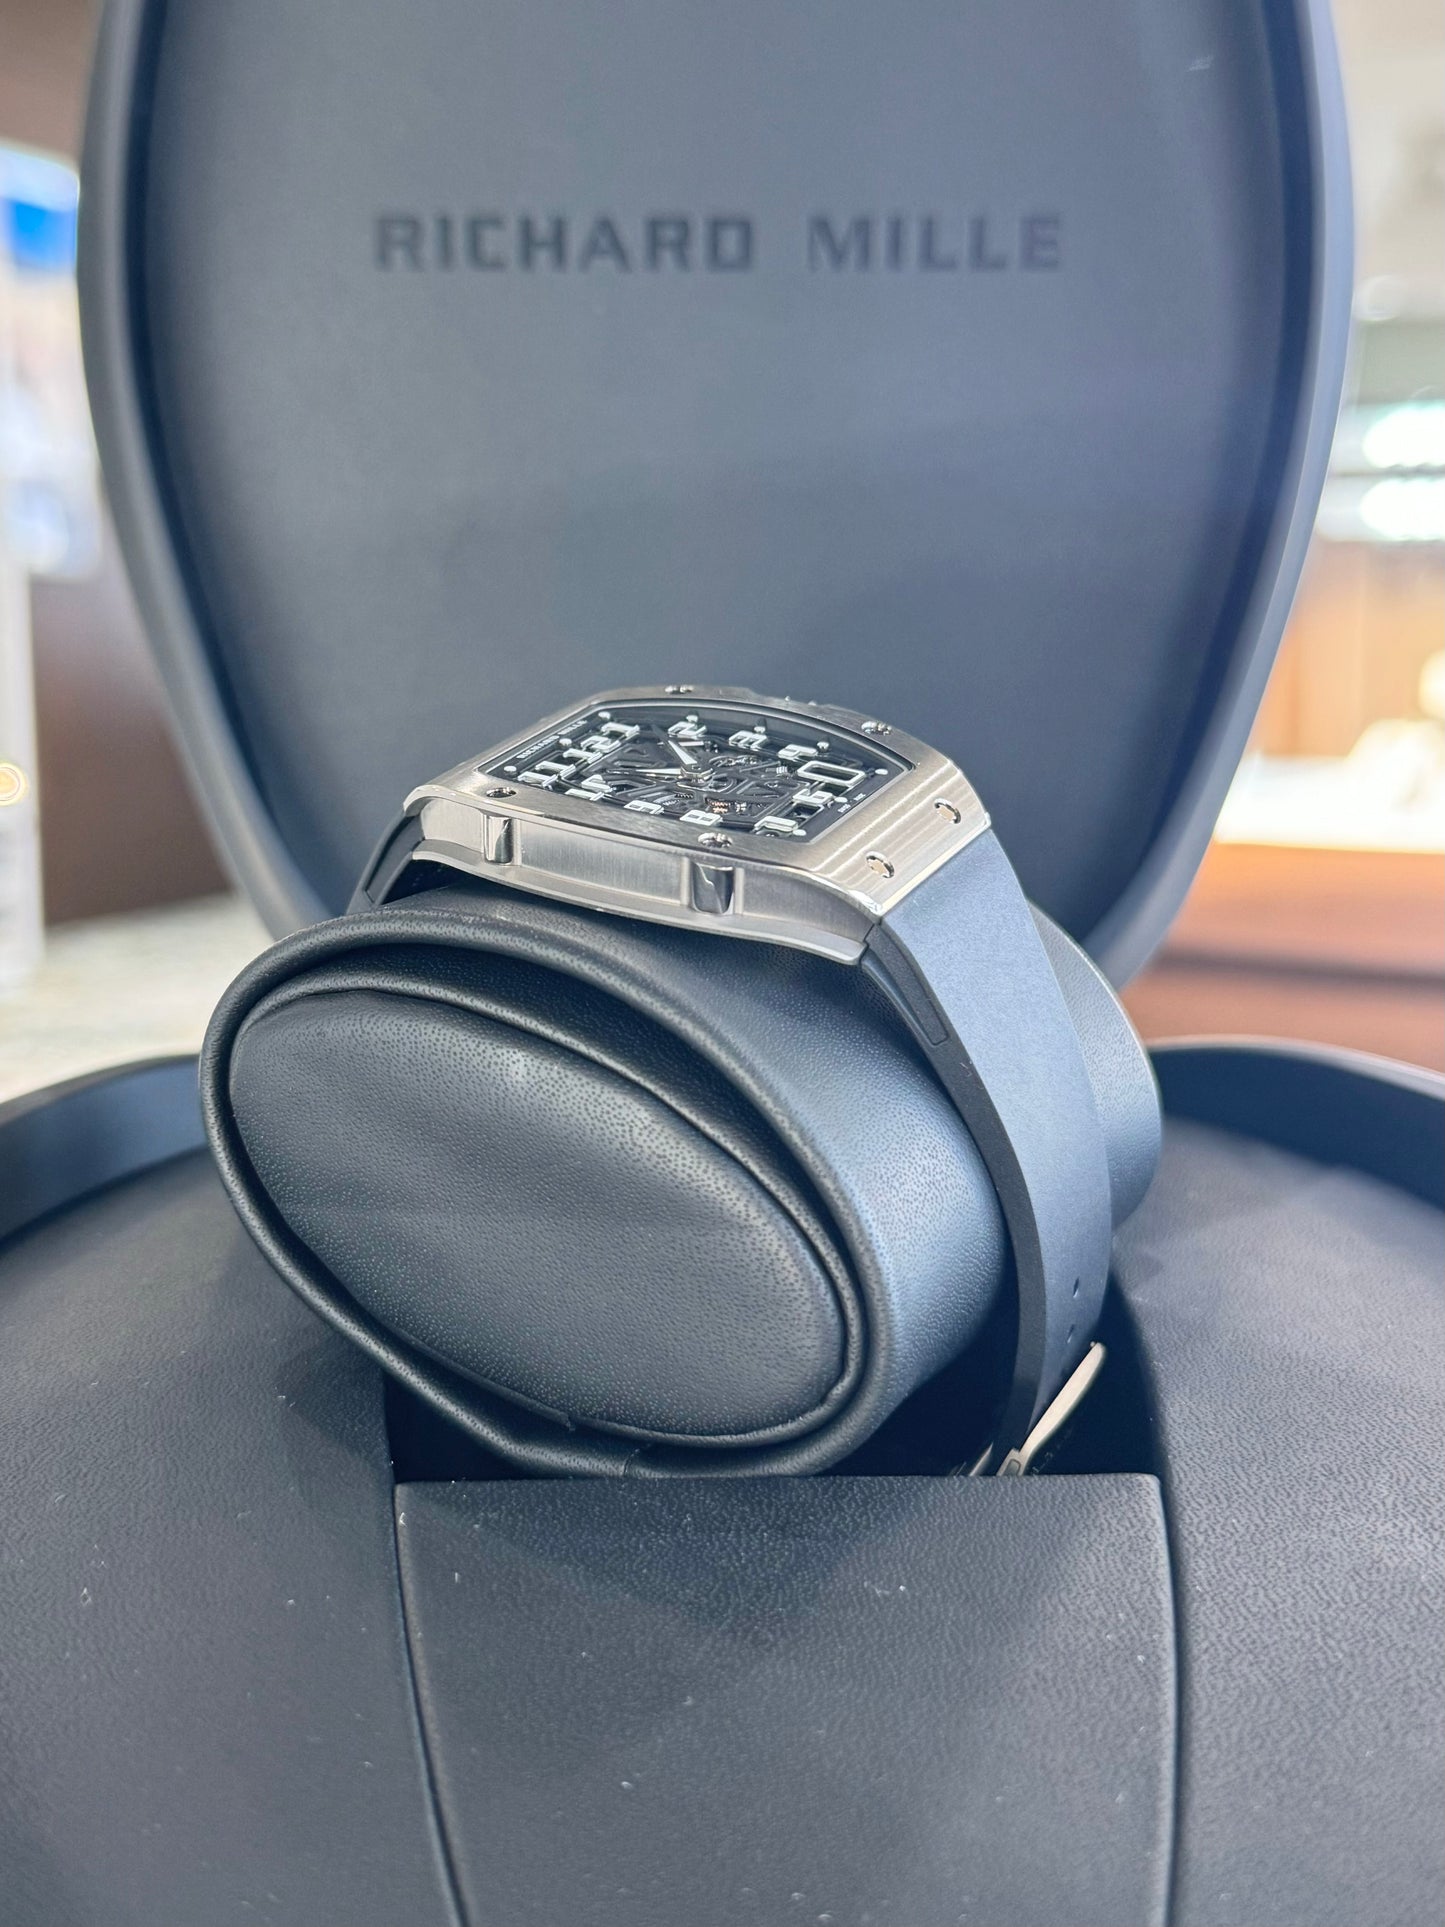 Richard Mille RM 67-01